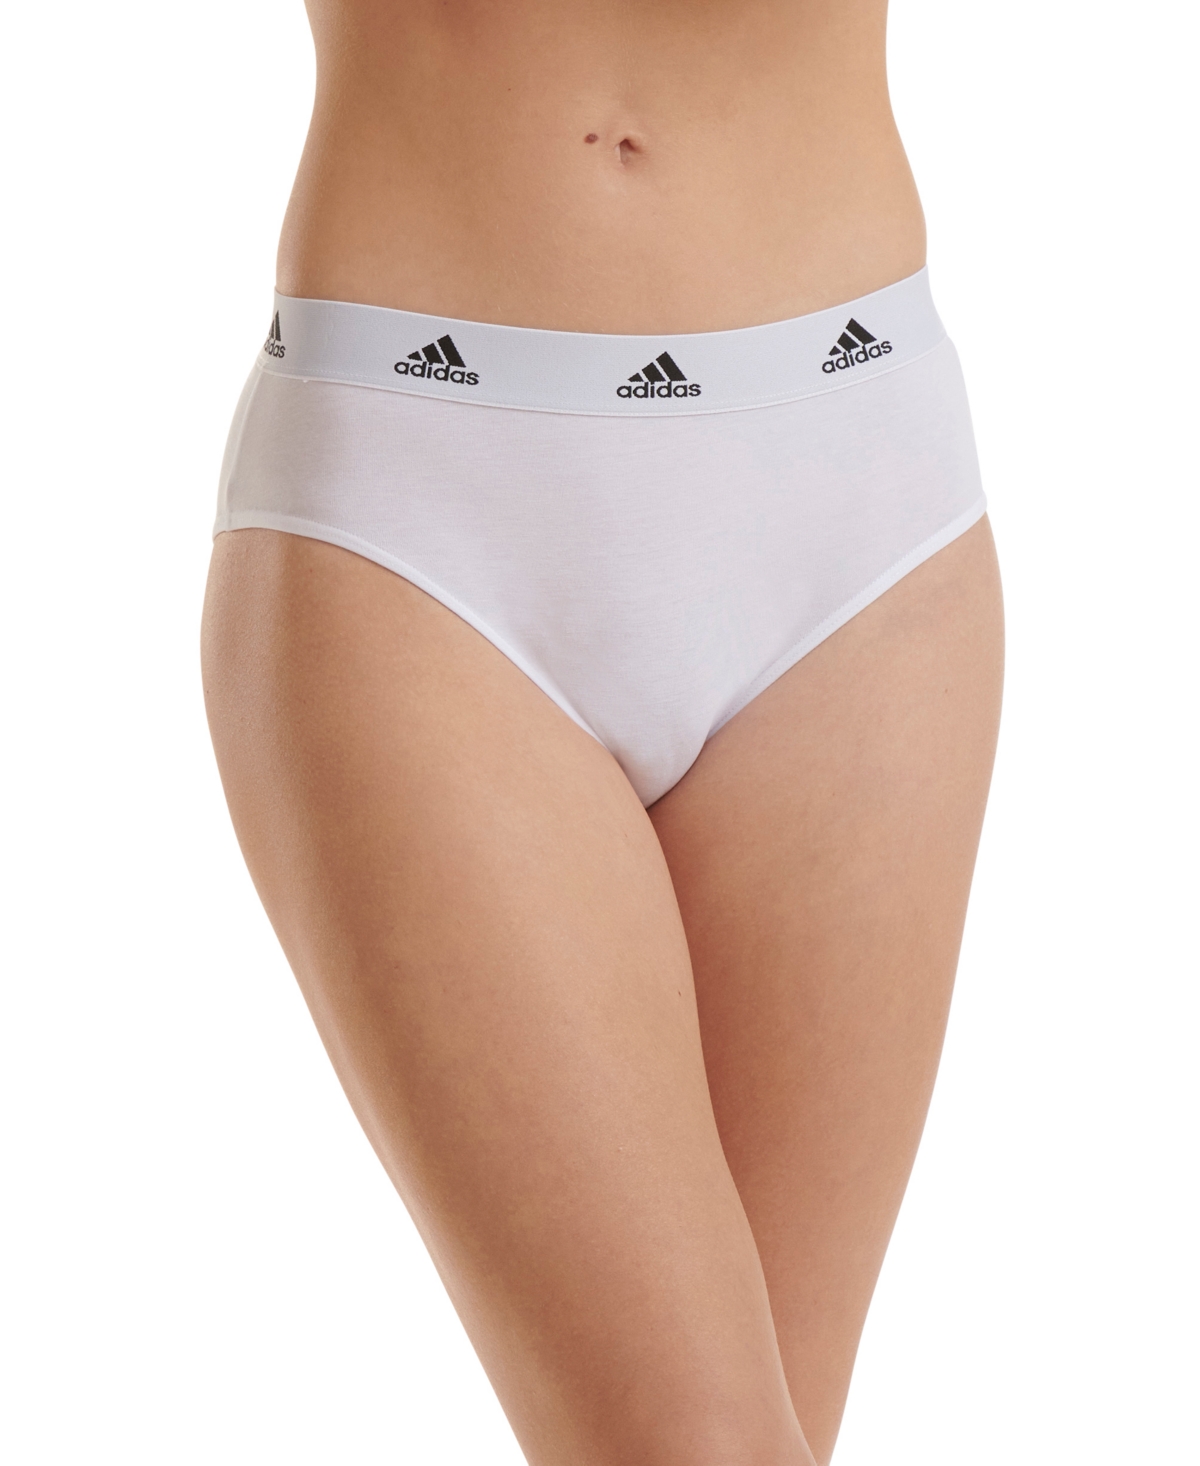 Adidas Originals Intimates Women's 3-pk. Active Comfort Cotton Bikini Underwear 4a3p92 In Blk,wht,ht